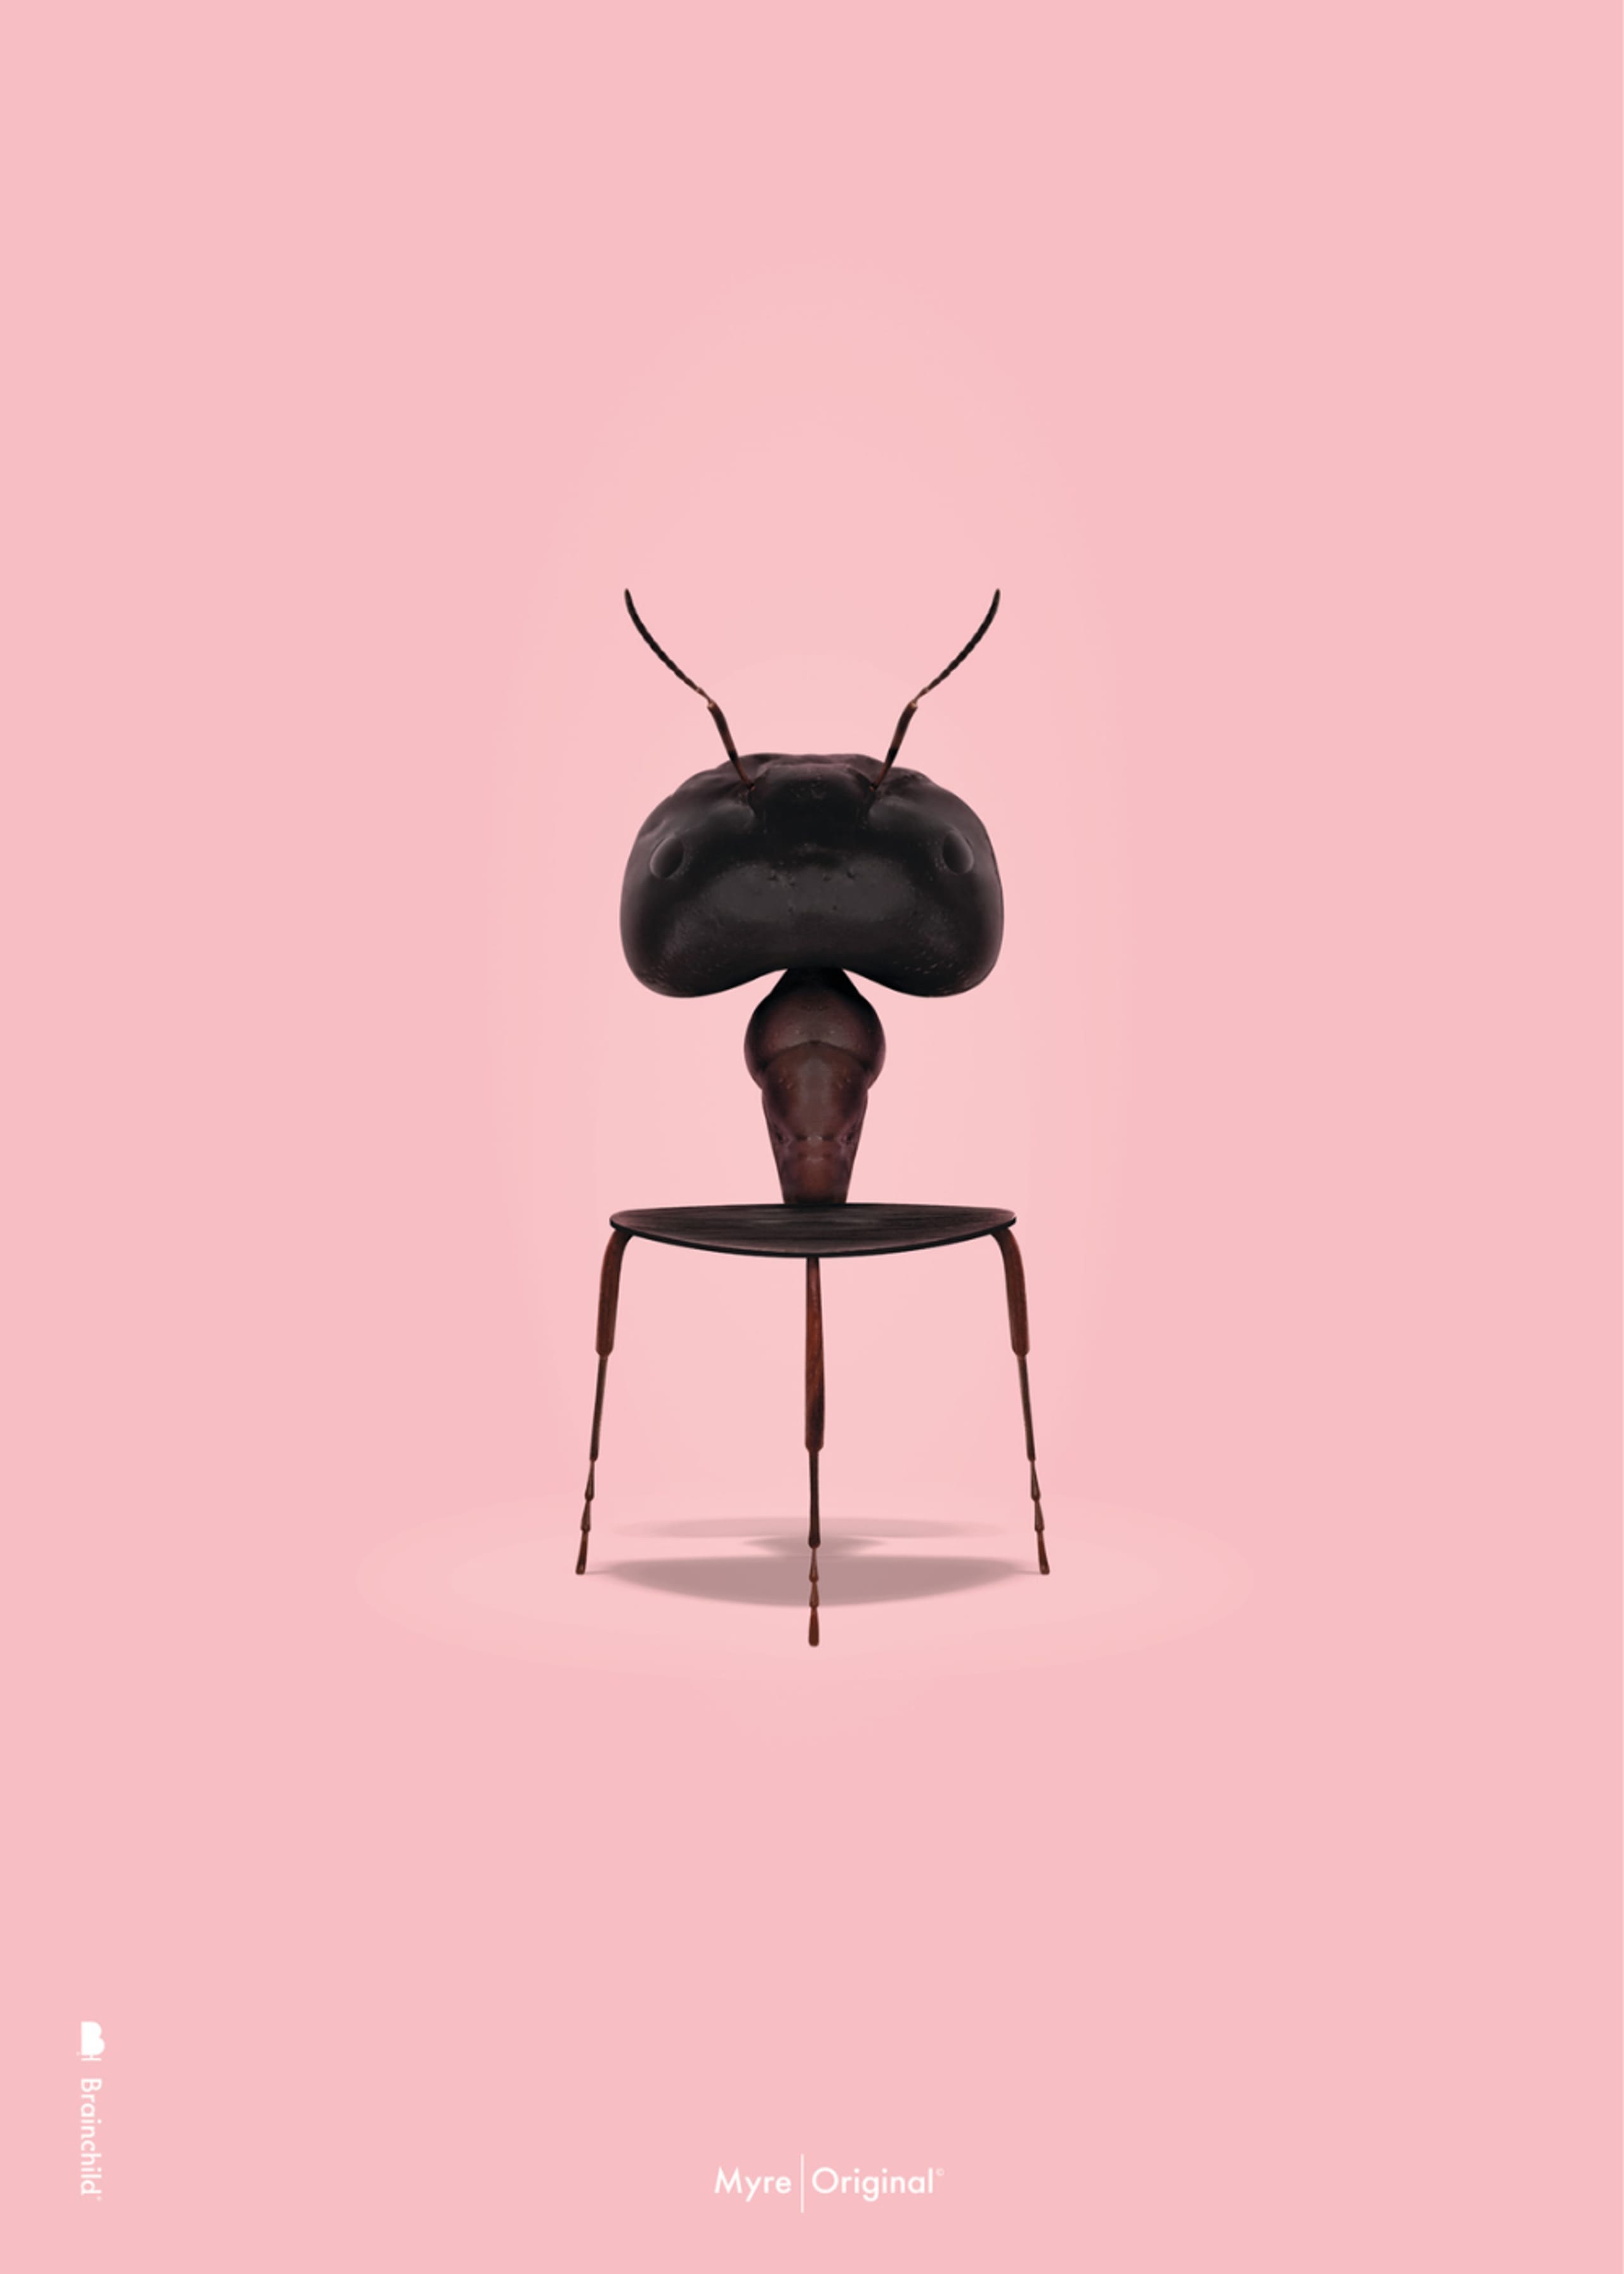 Brainchild - Plakat - Classic poster - pink ant - Ingen ramme